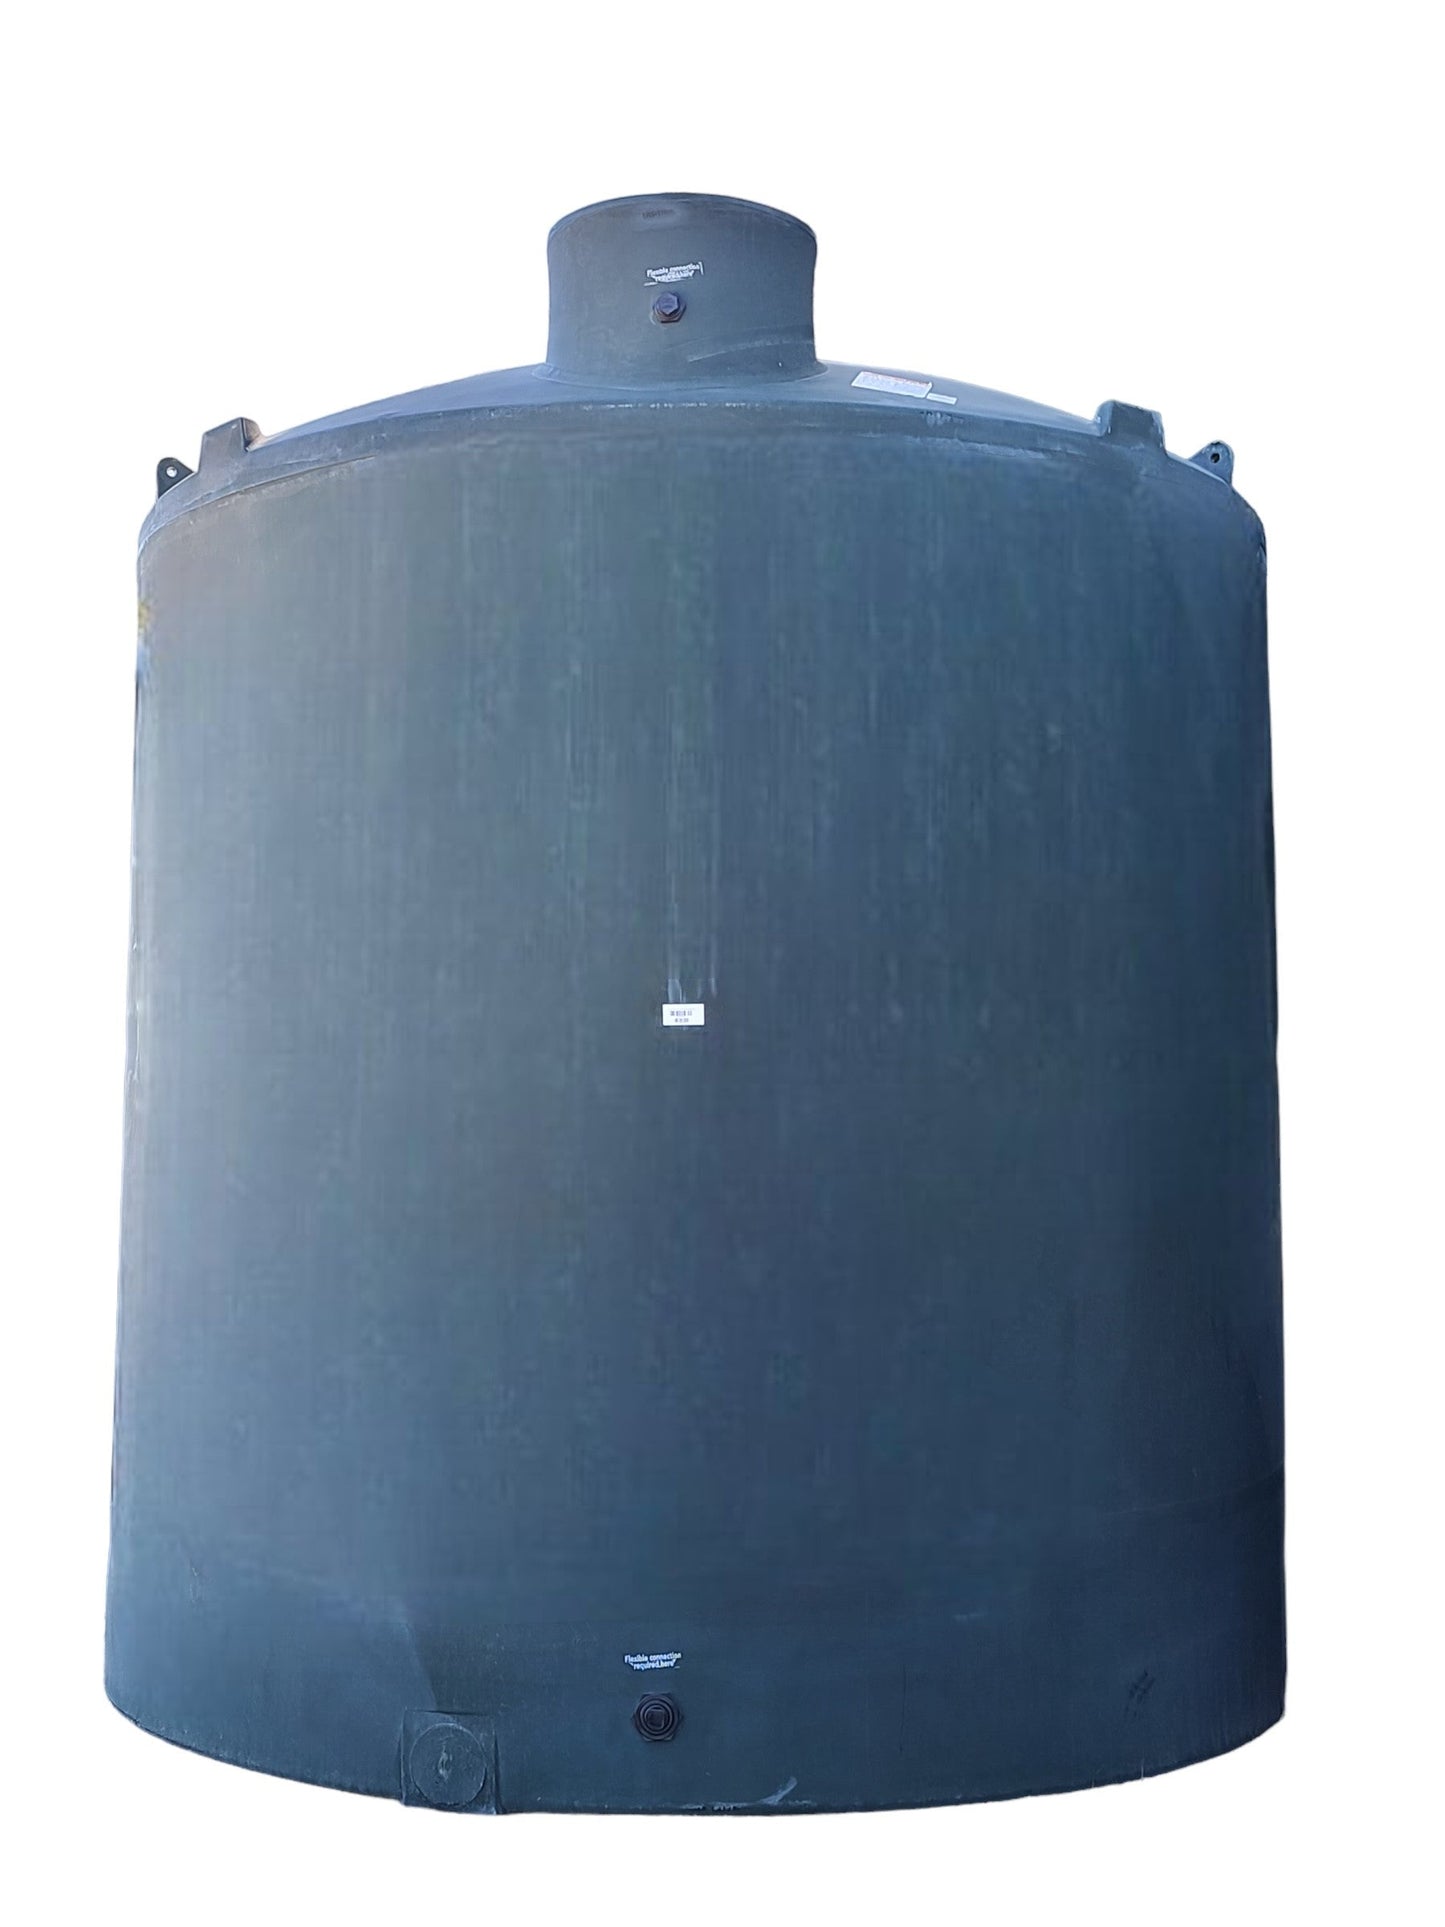 10,000 Gallon Vertical Water Storage Tank 144″D x 161″H